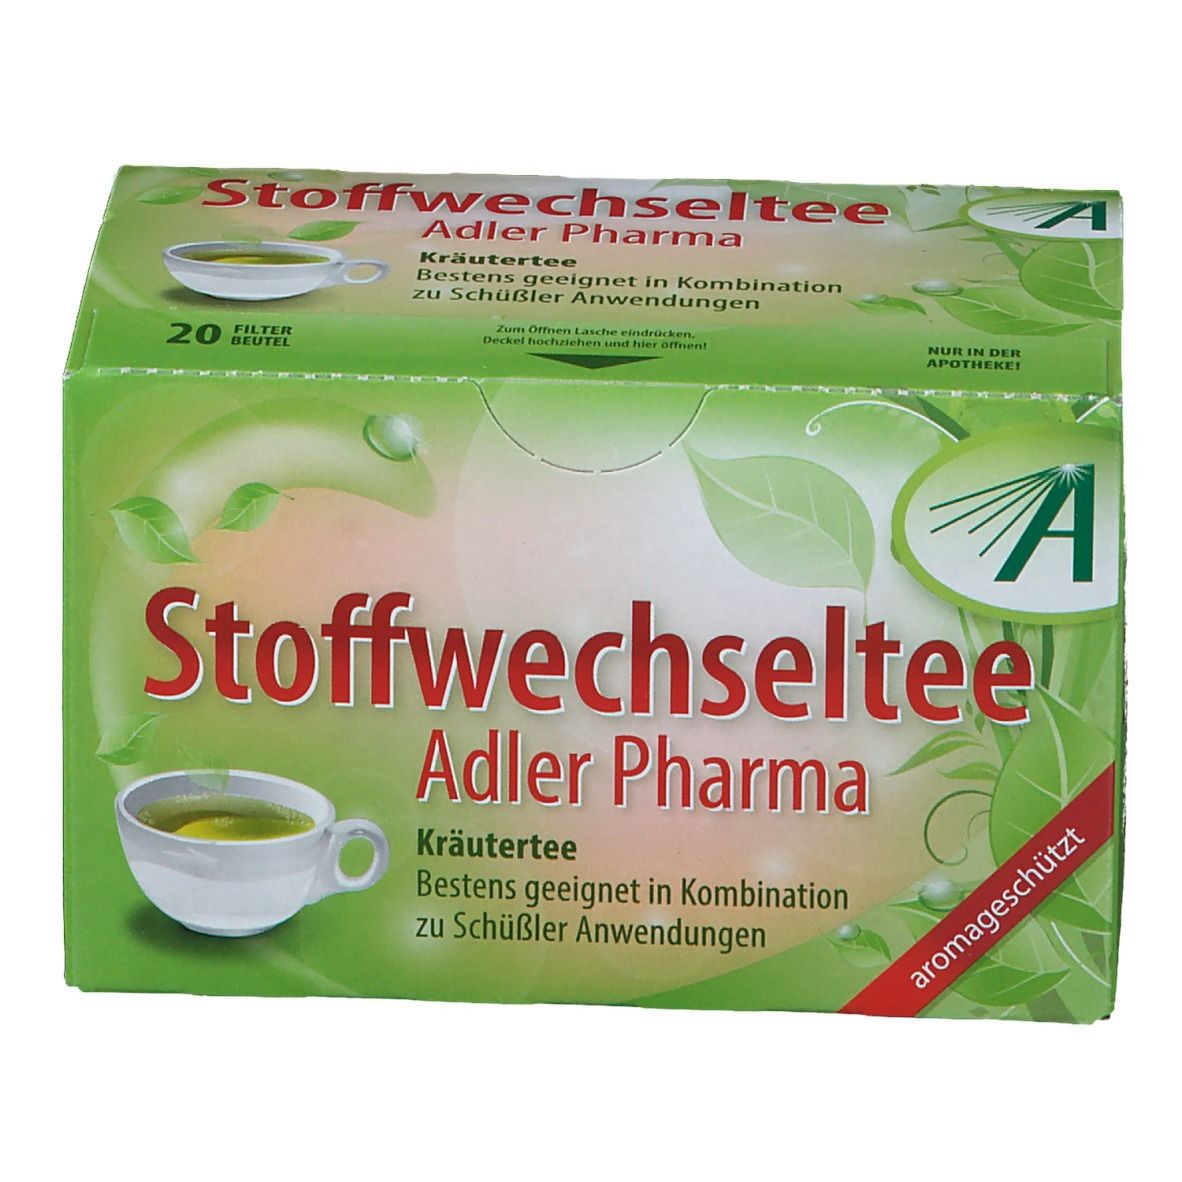 Adler Pharma Stoffwechseltee